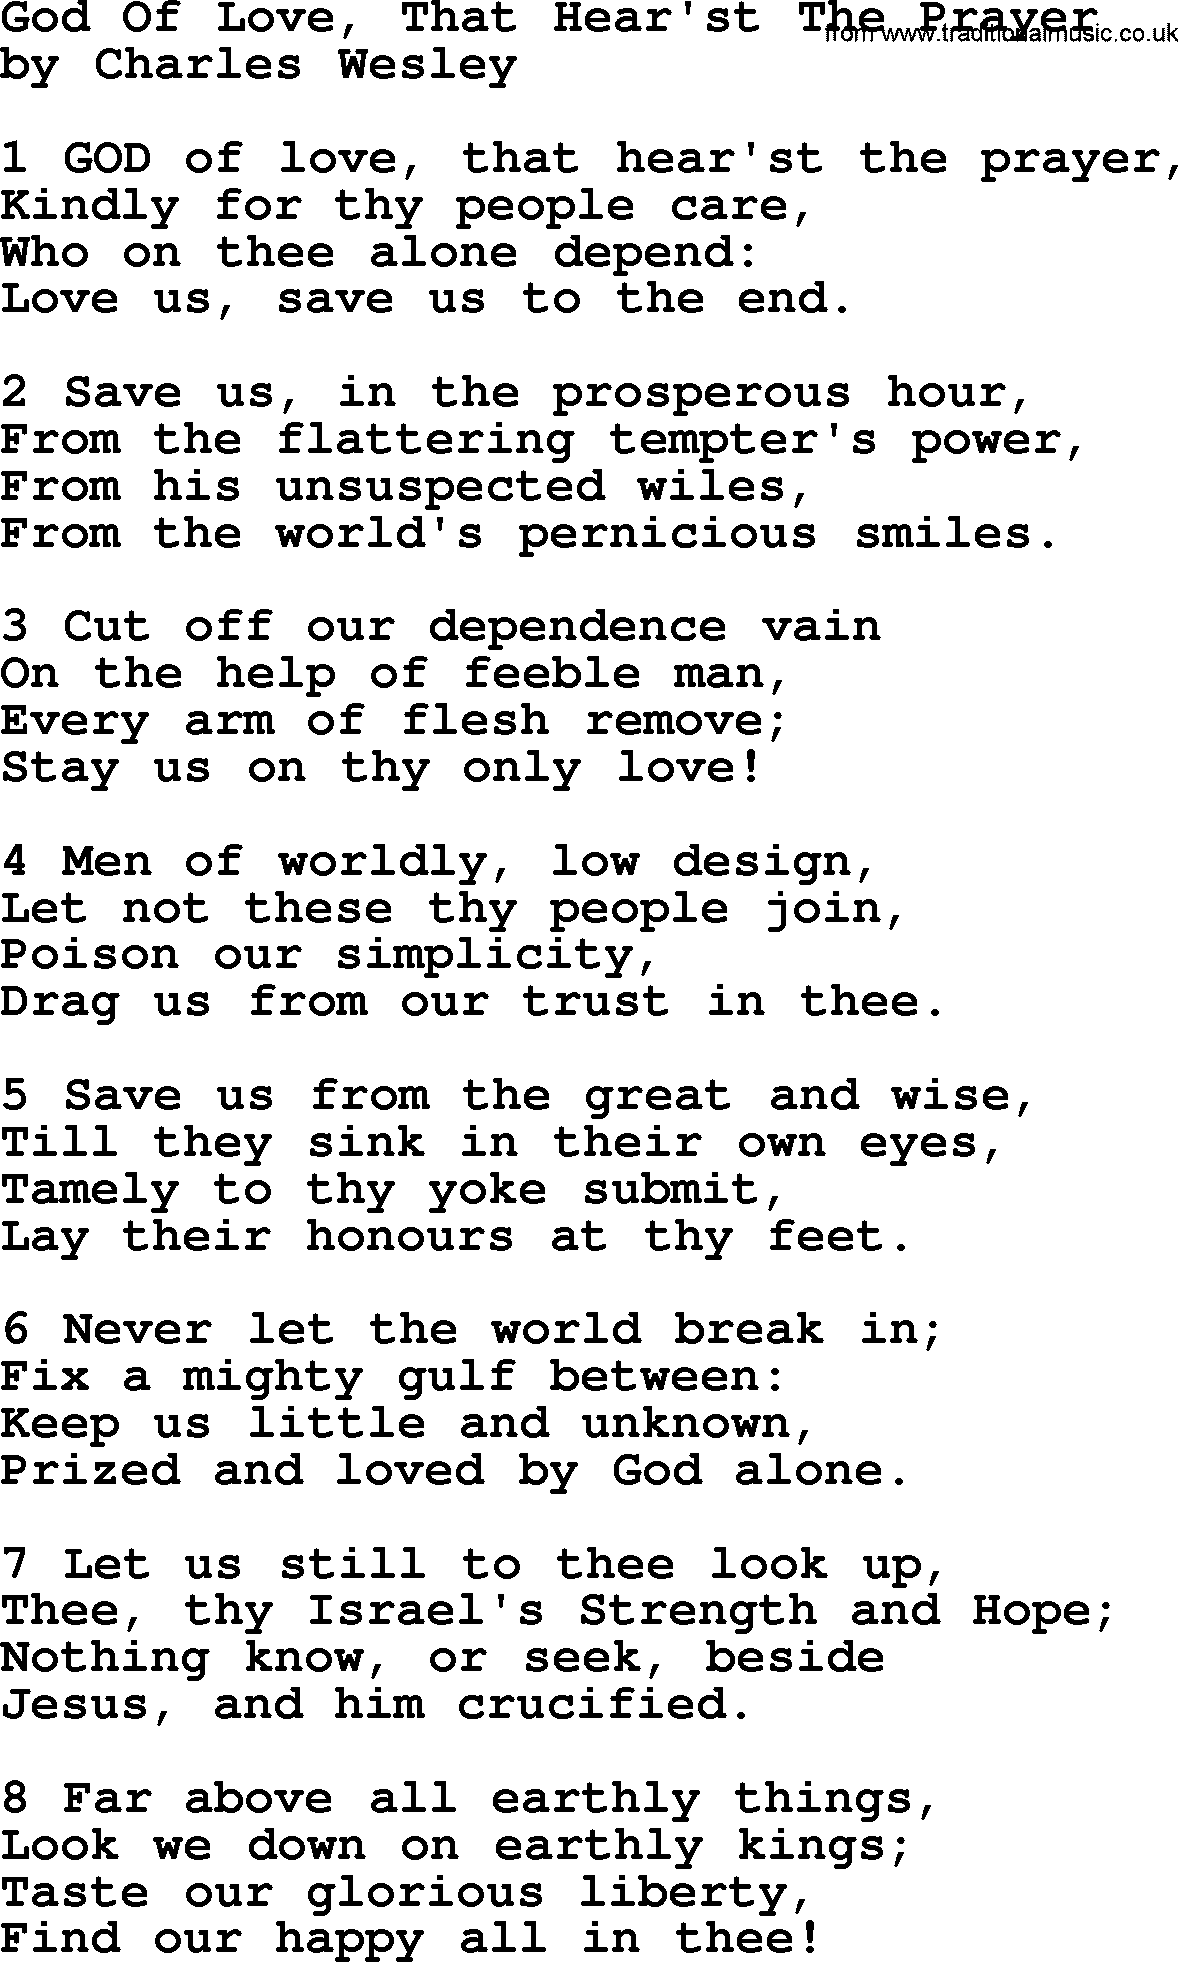 Charles Wesley hymn: God Of Love, That Hear'st The Prayer, lyrics